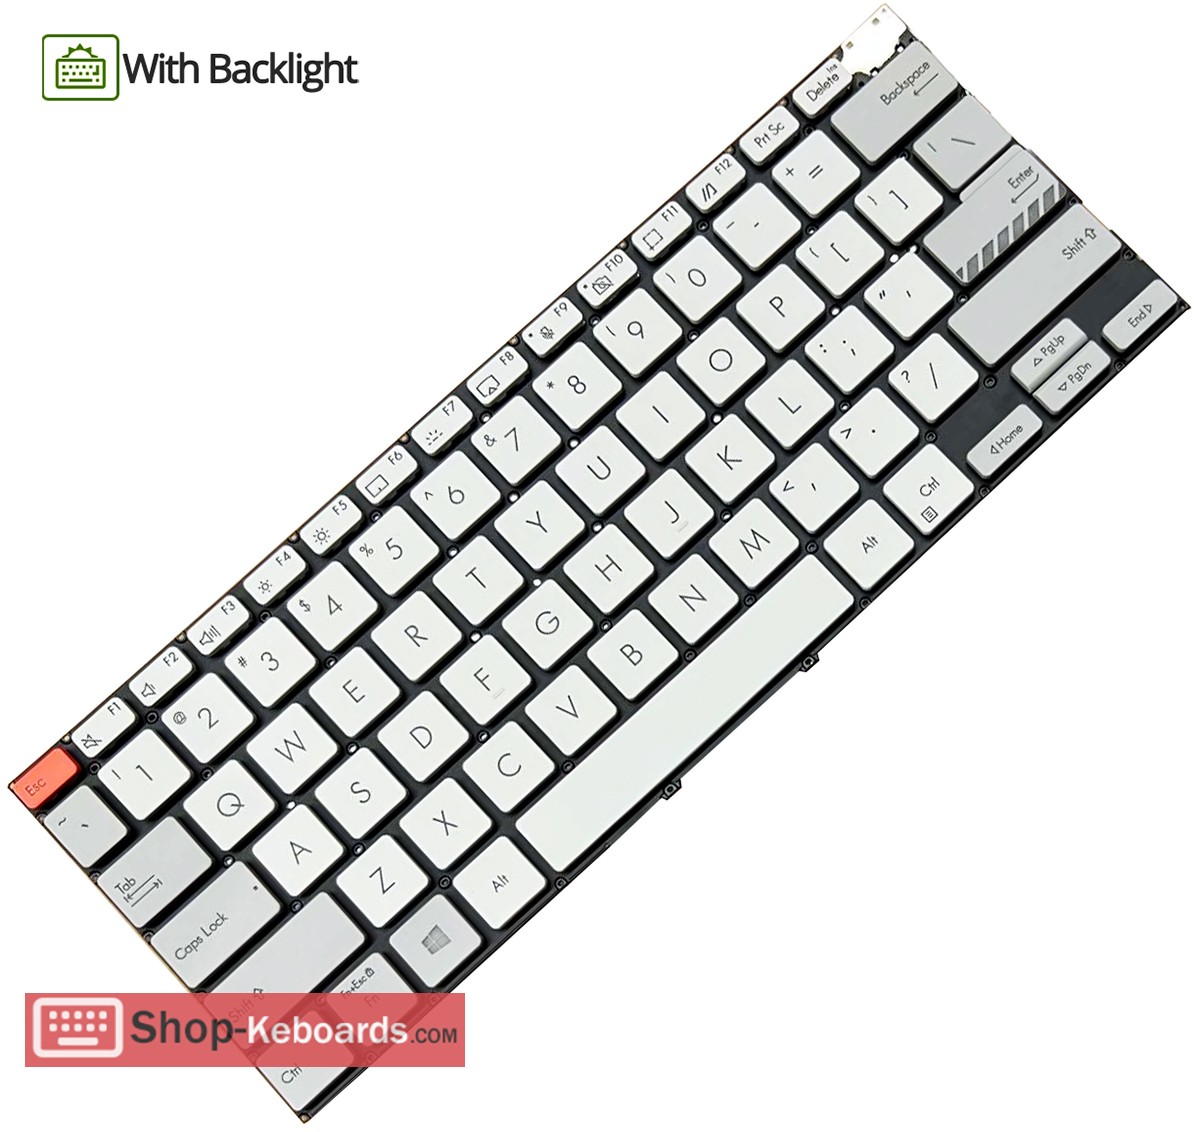 Asus 0KNB0-1821UK00 Keyboard replacement